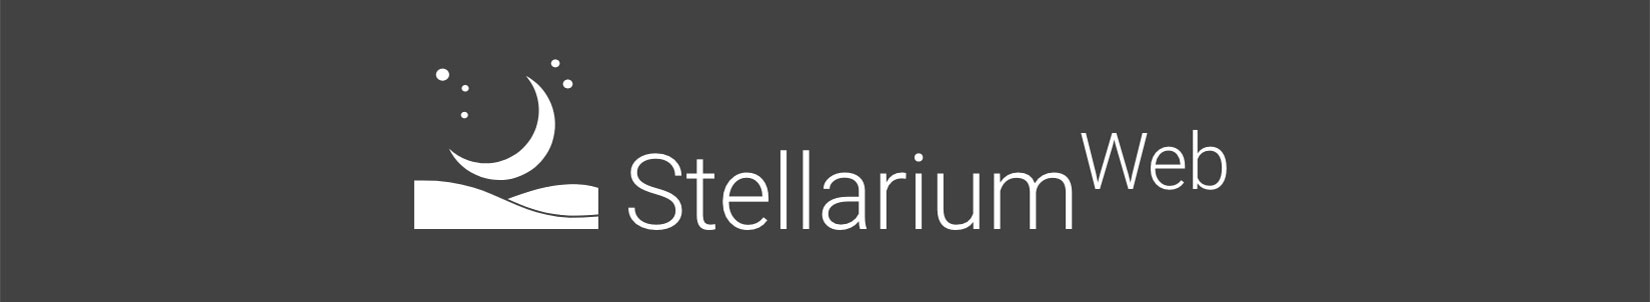 stellarium-web